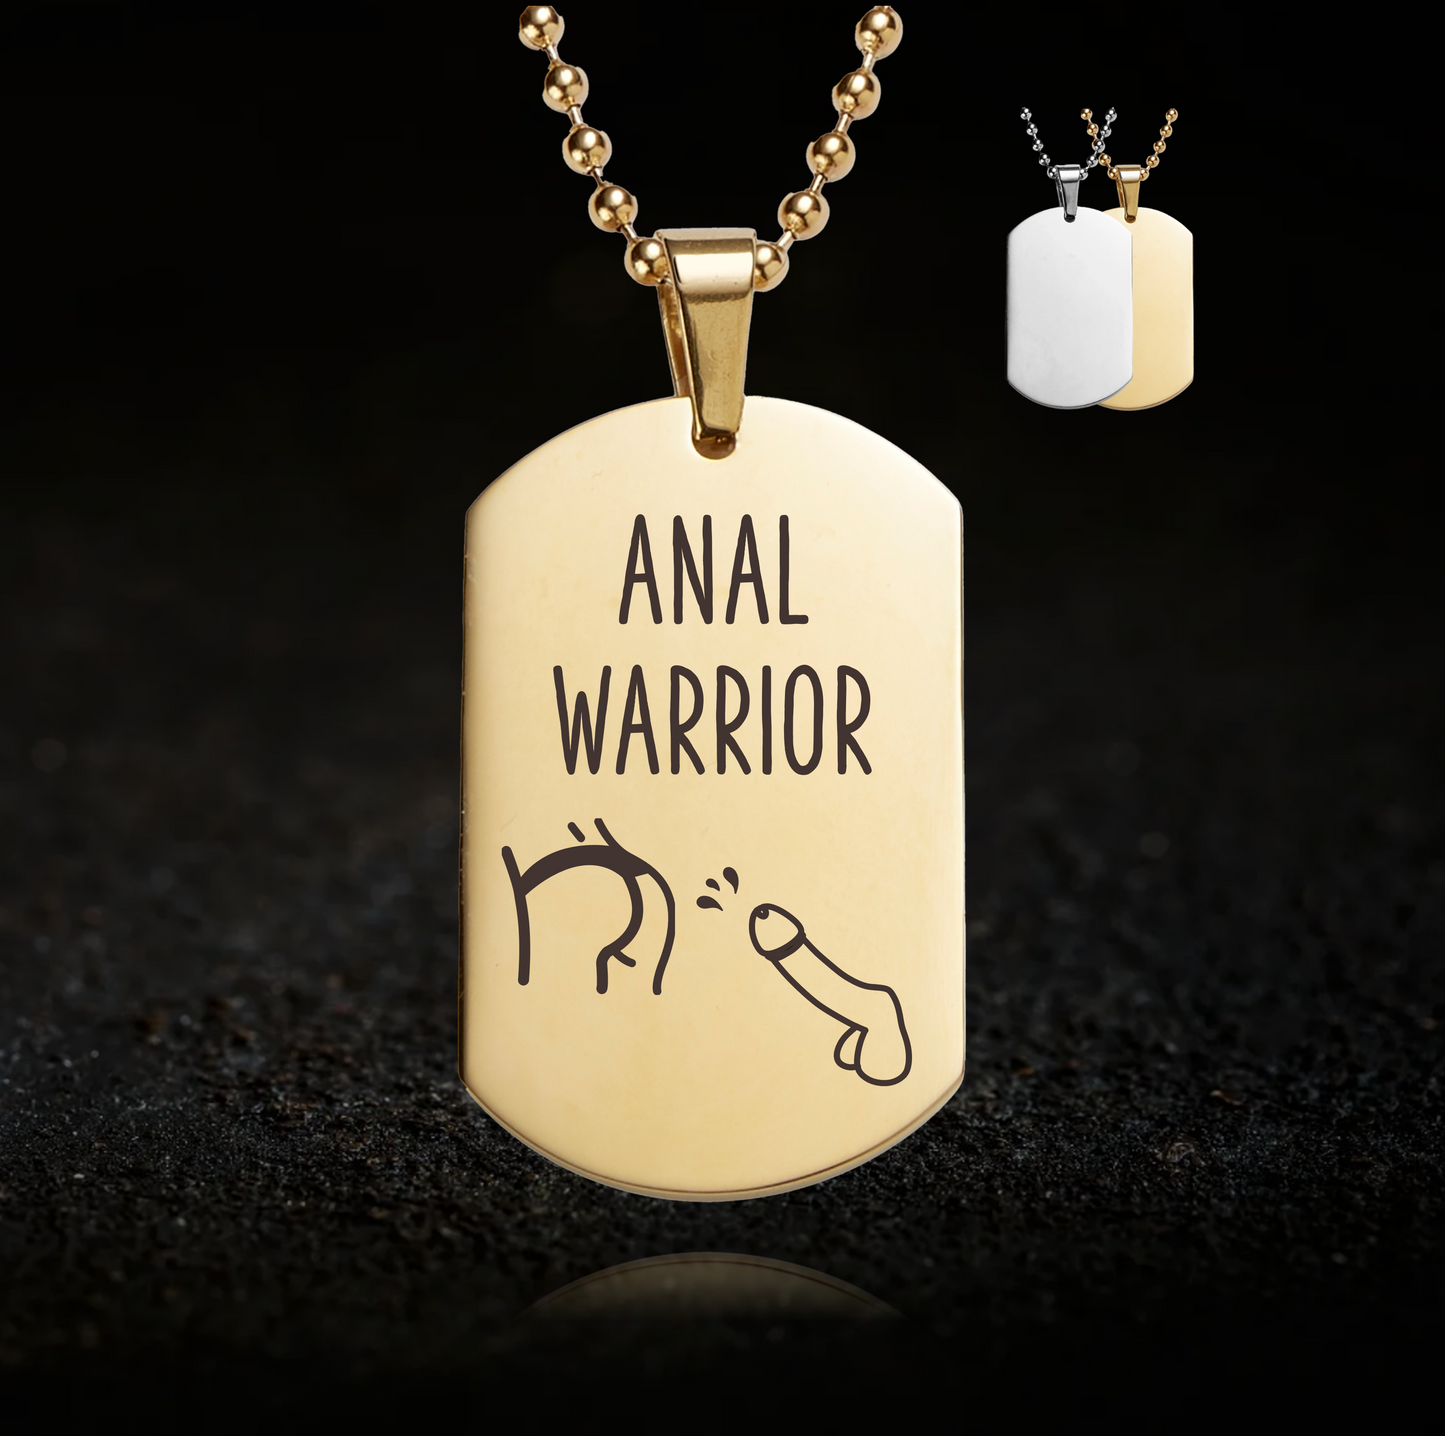 Anal Warrior Jewellery